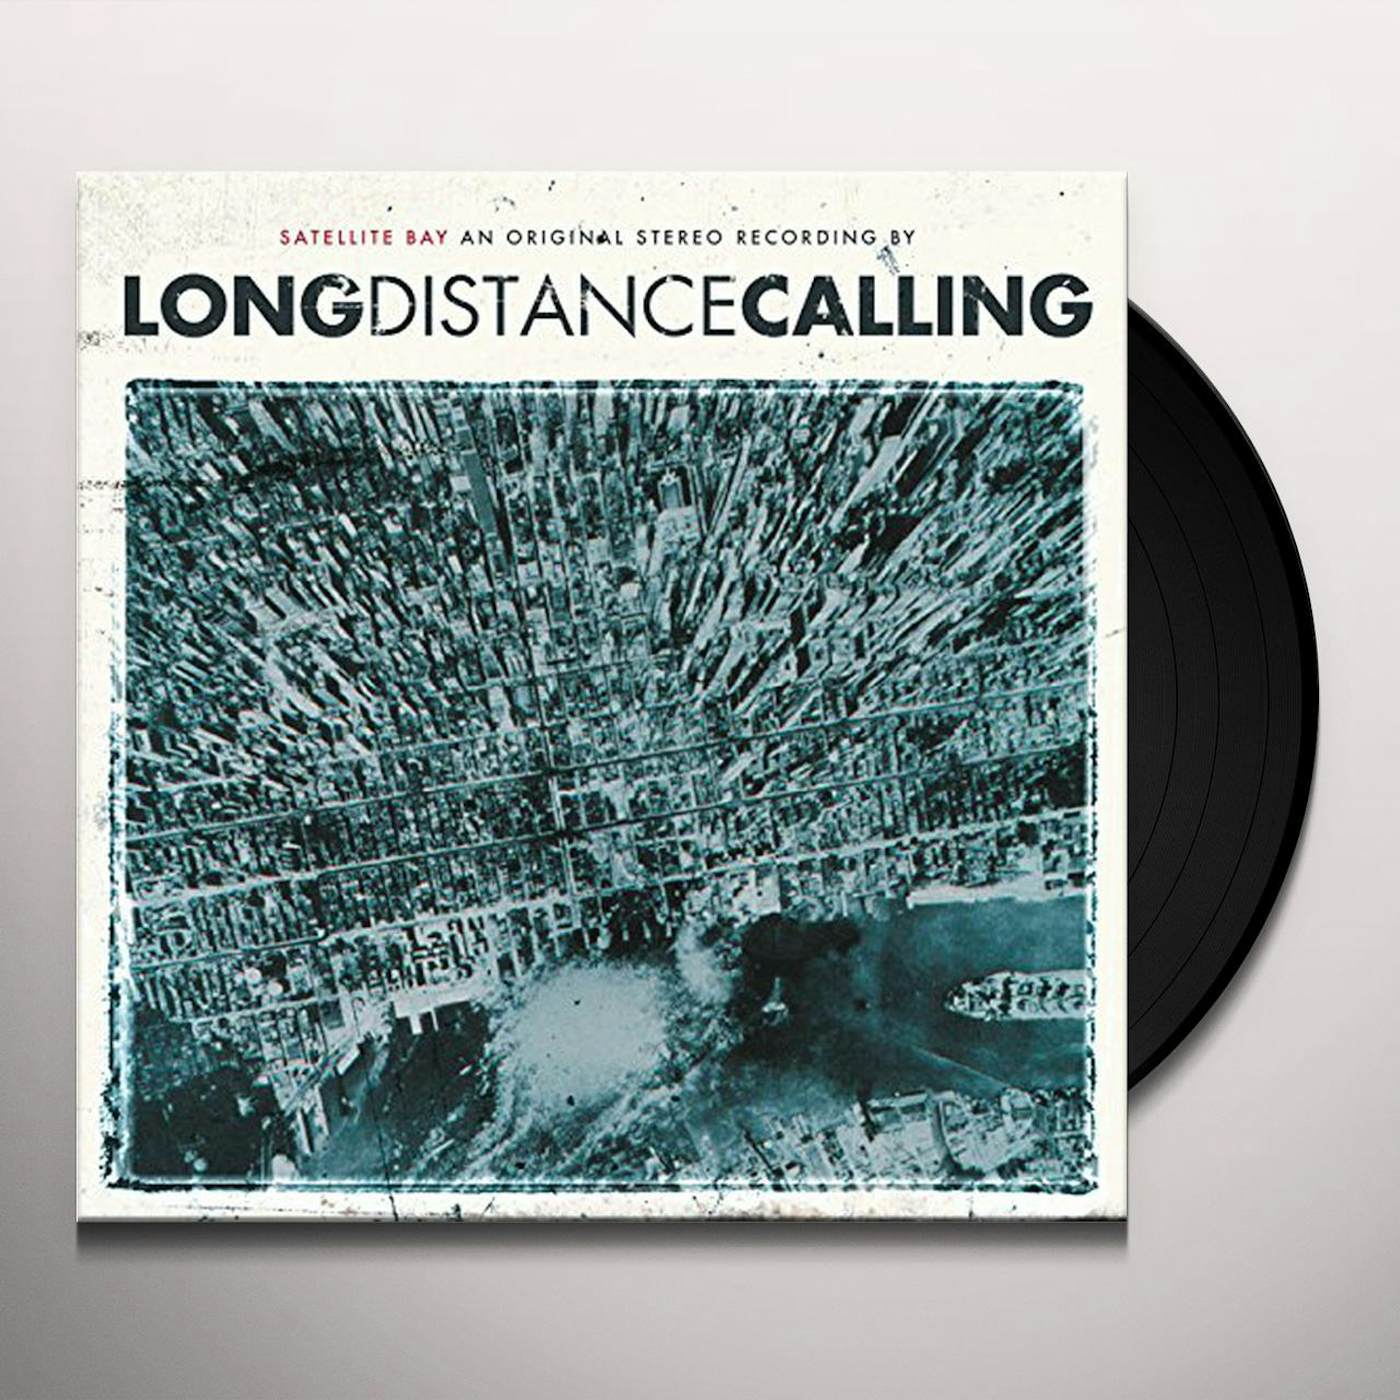 Long Distance Calling Satellite Bay Vinyl Record